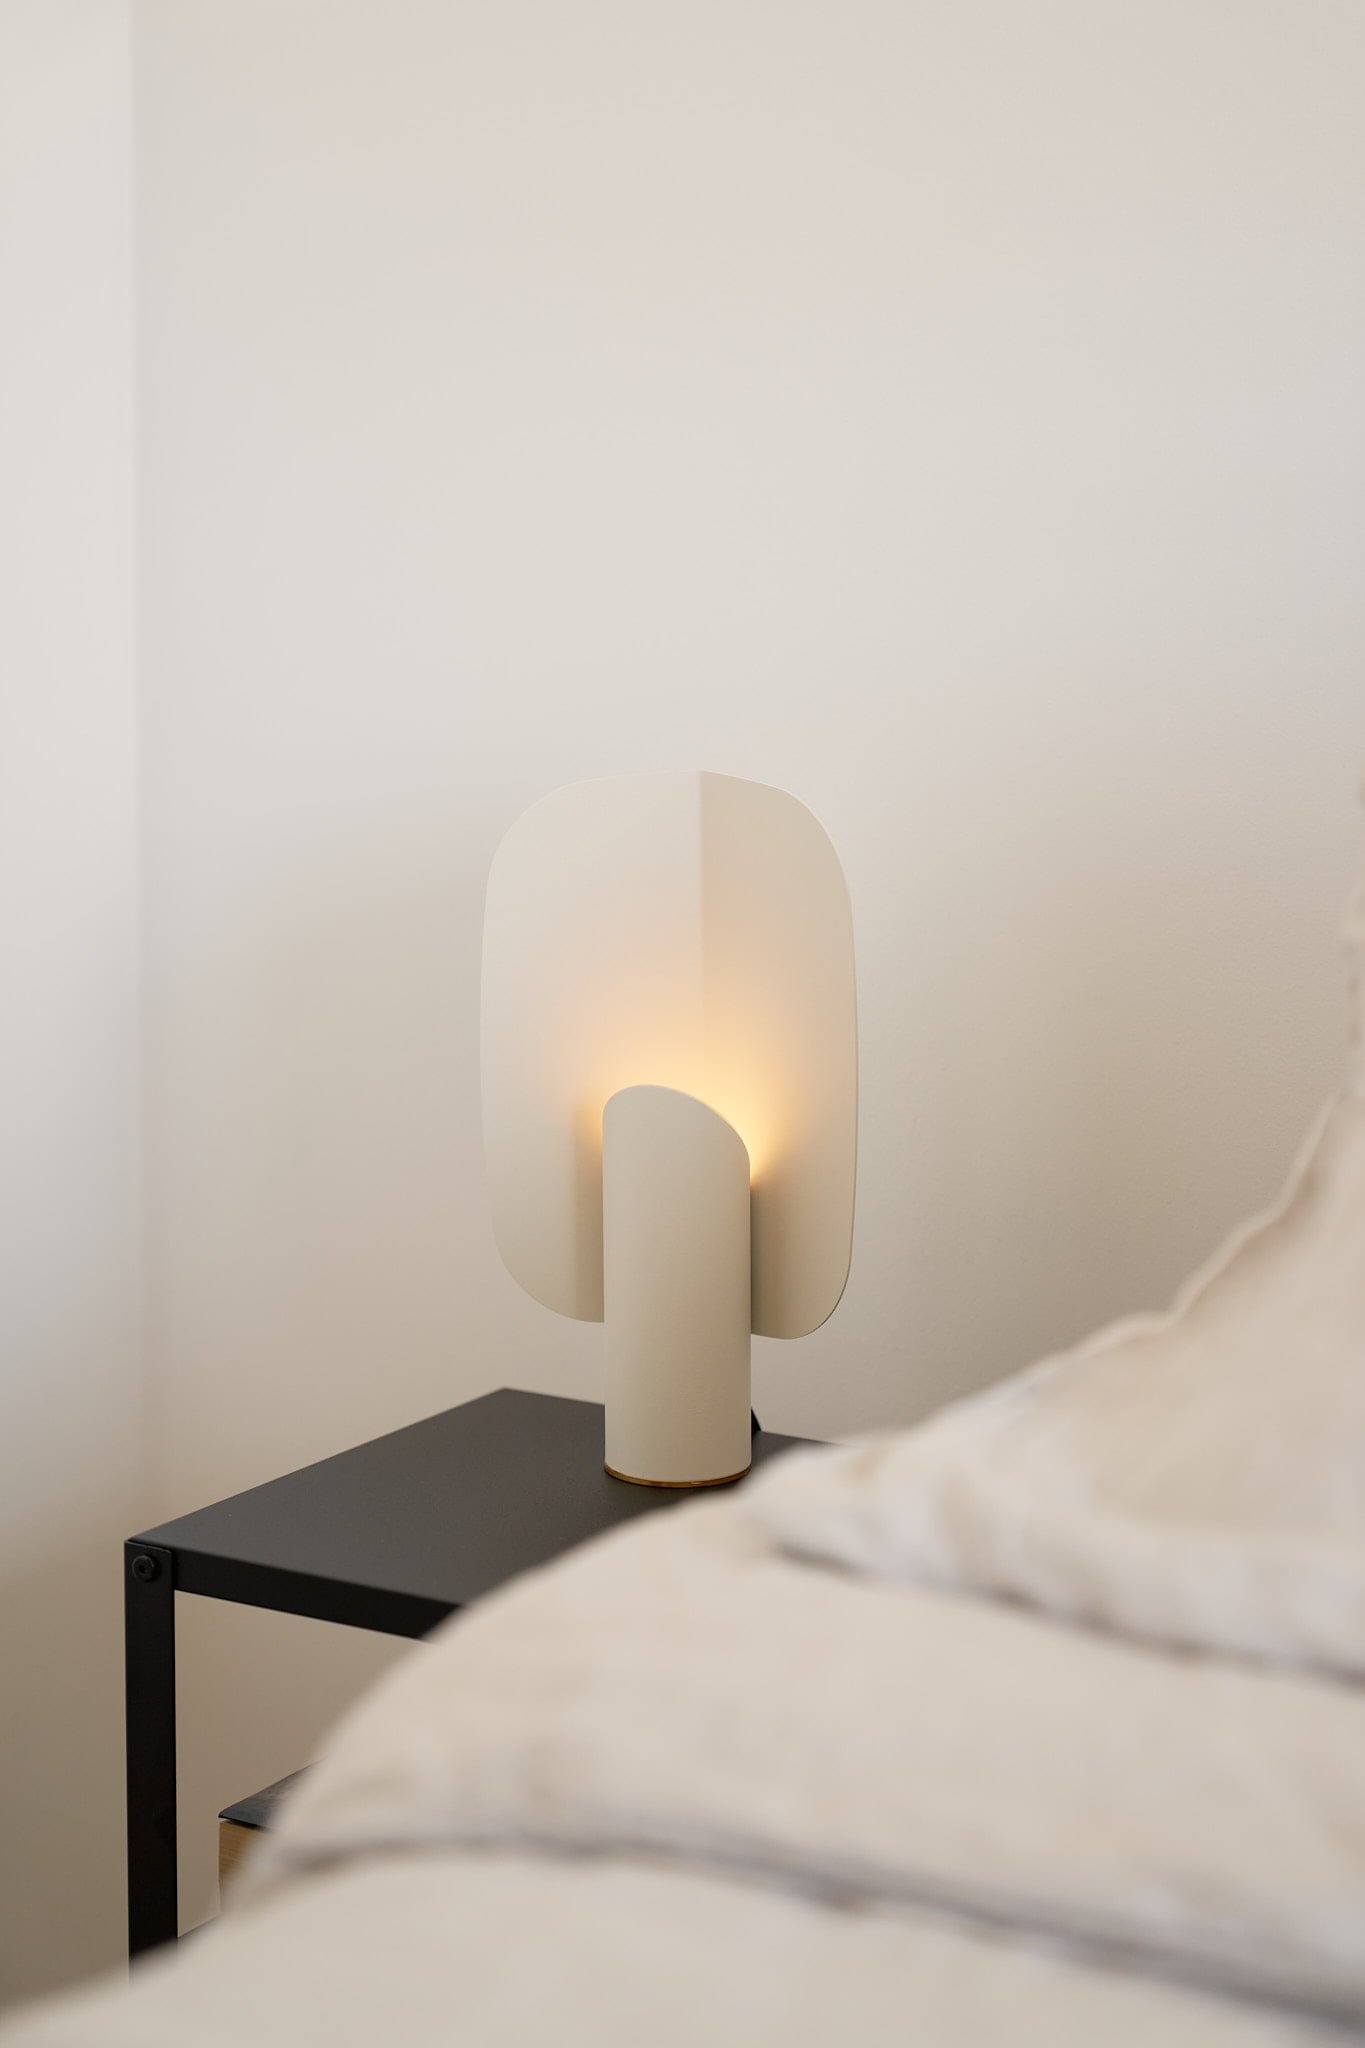 White metal table lamp designed by Bandido Studio